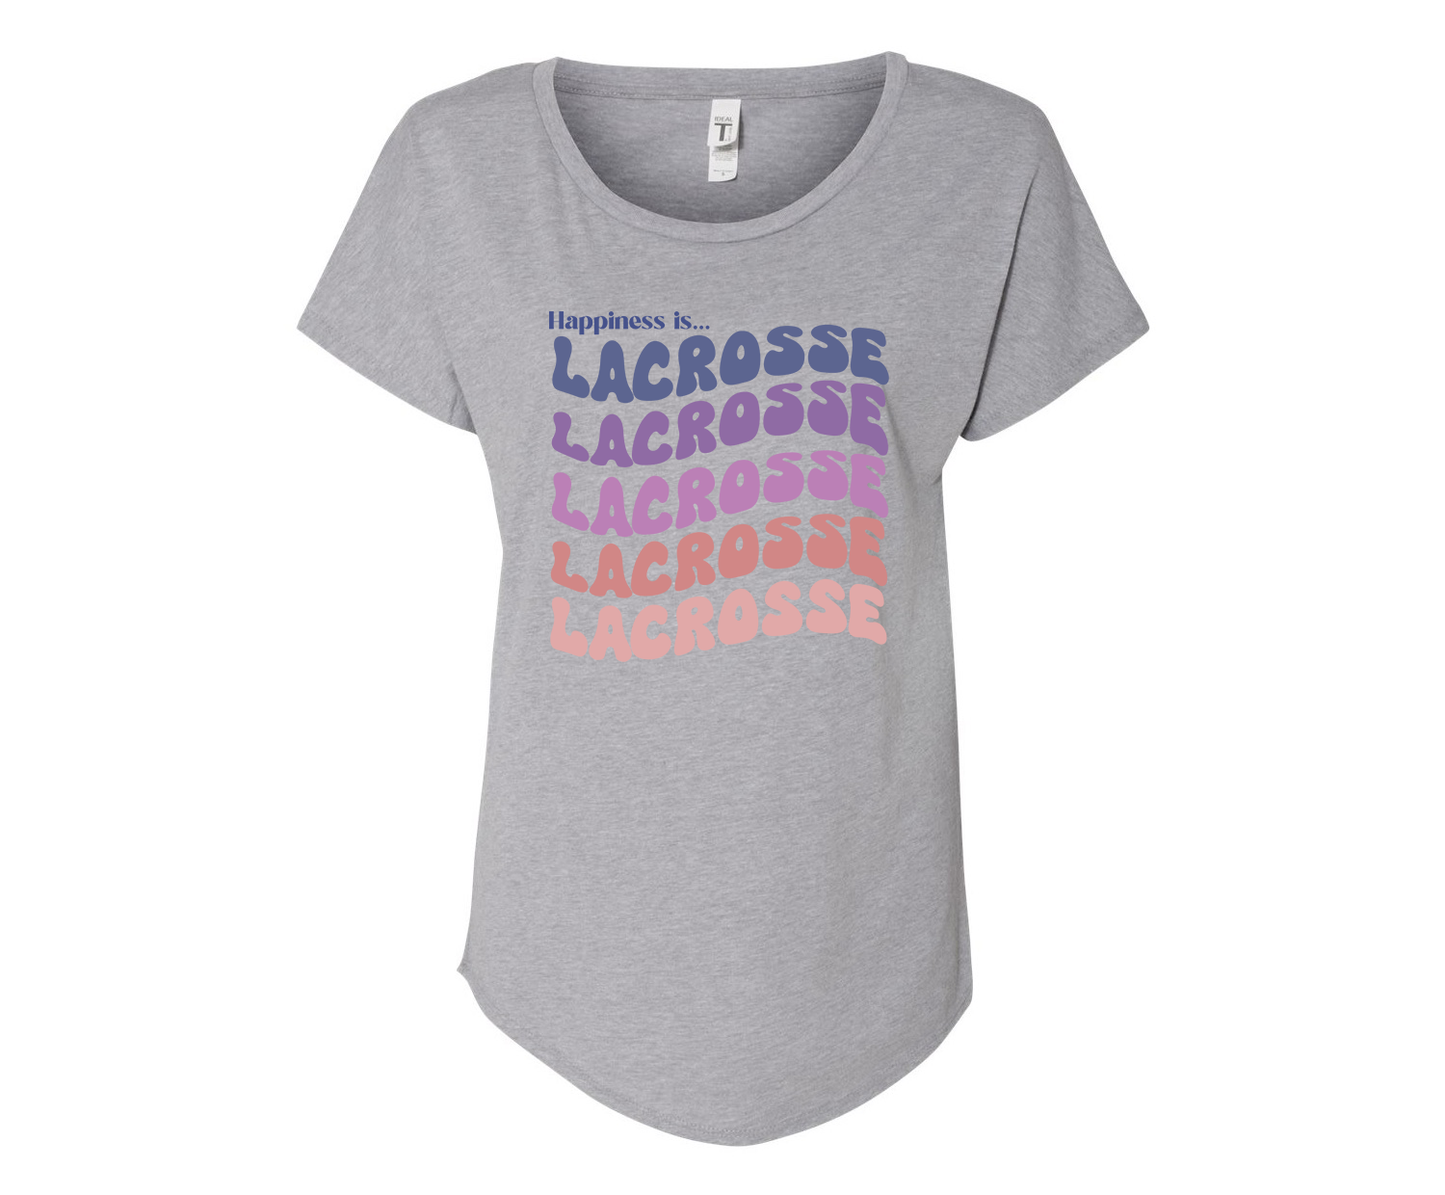 Happiness is Lacrosse Ladies Tee Shirt - In White & Grey